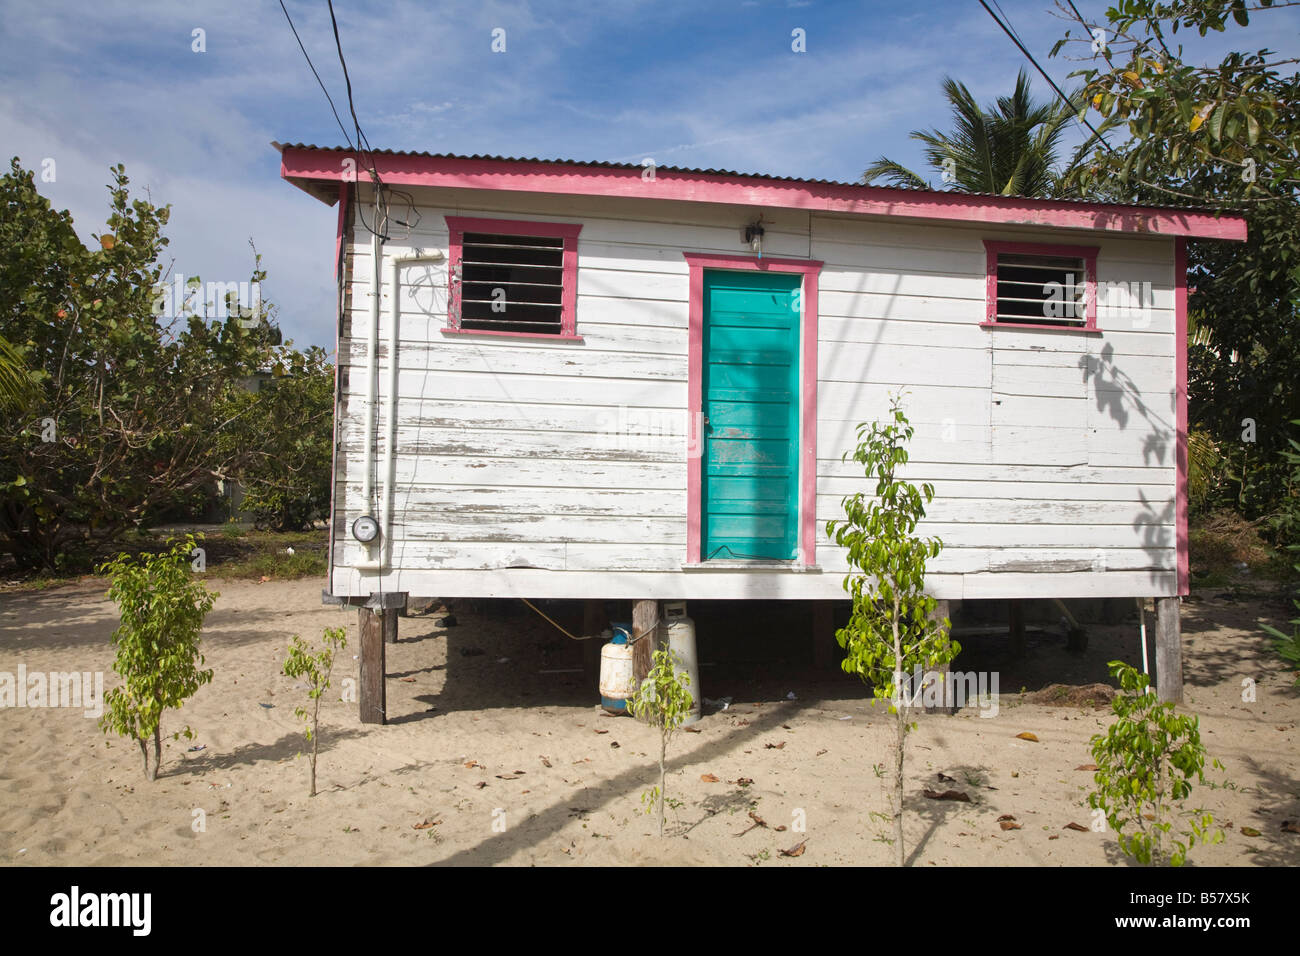 Holzhaus Placencia Belize Mittelamerika Stockfoto